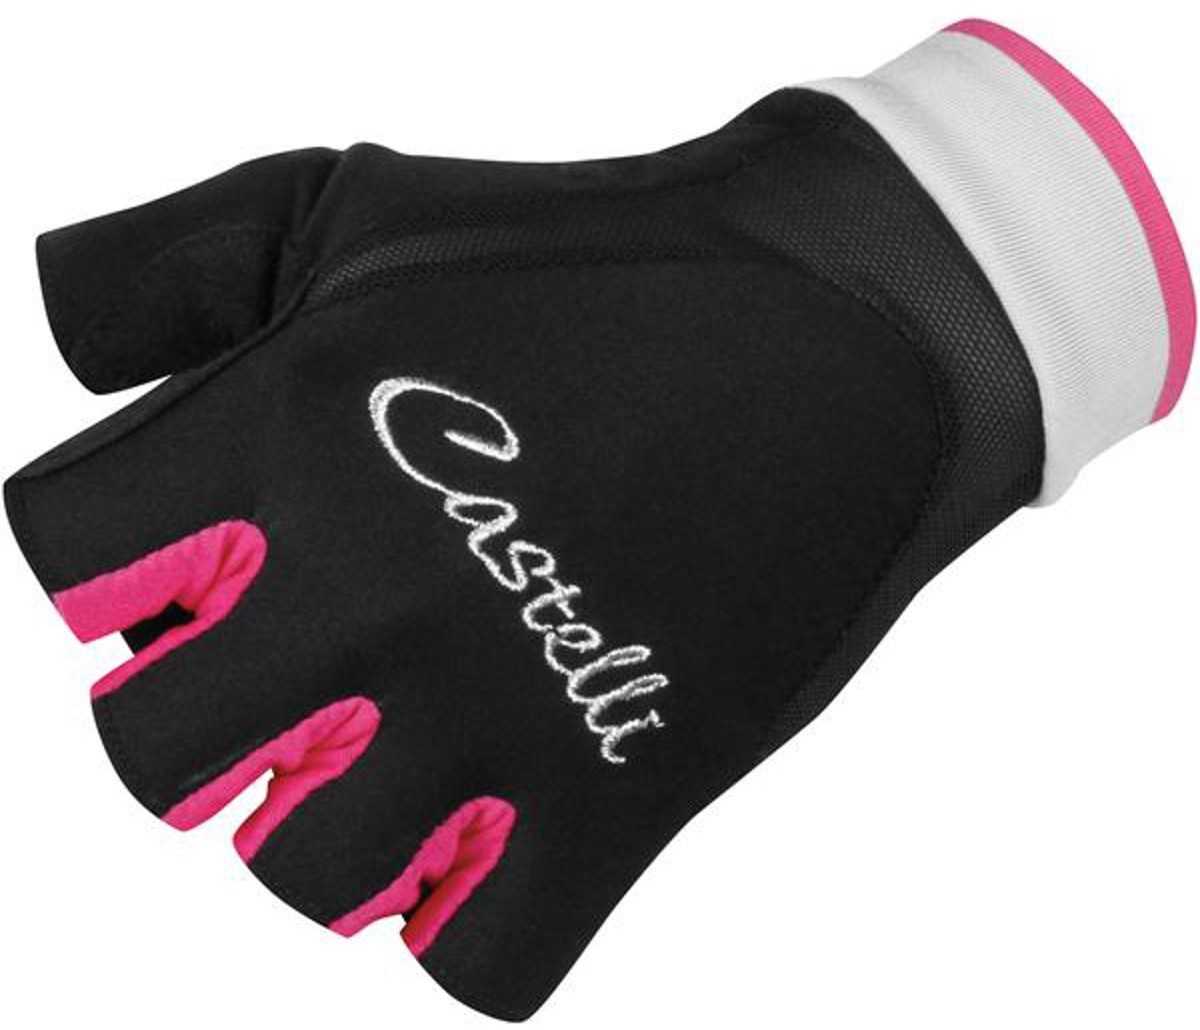 Castelli Perla Womens Short Finger Cycling Gloves product image